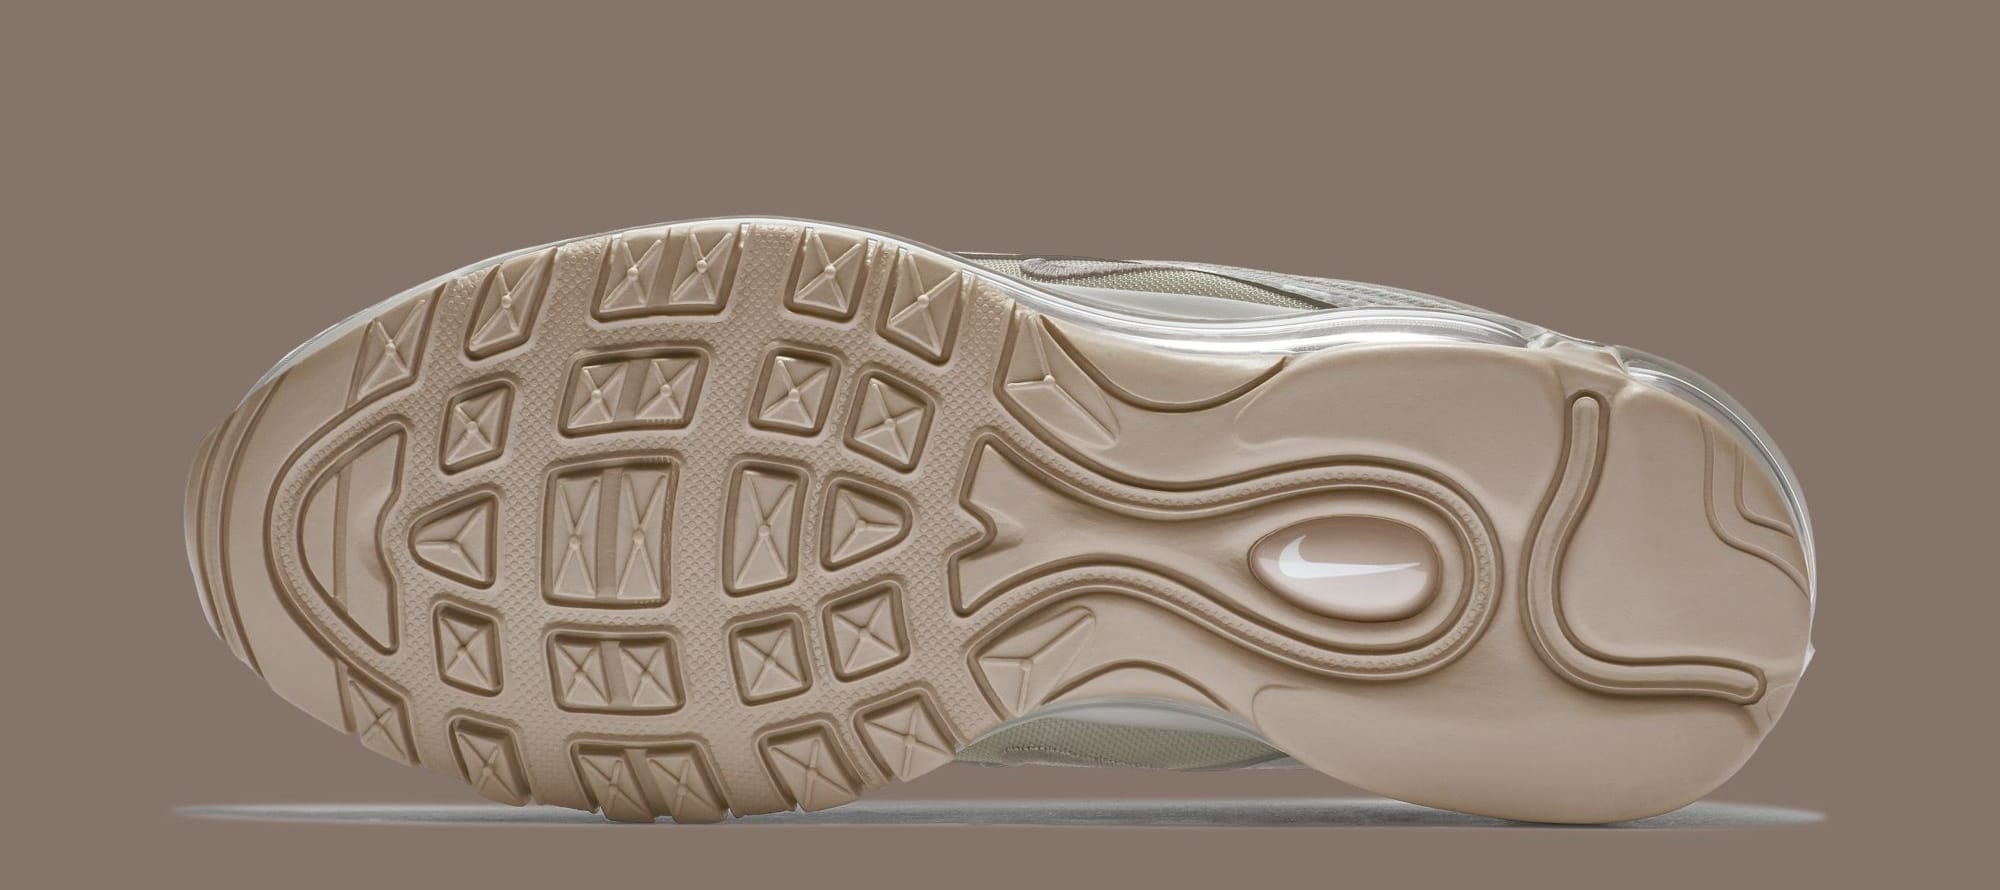 Nike WMNS Air Max 97 Premium &#x27;Light Bone/Diffused Taupe/Sepia Stone&#x27; 917646-004 (Sole)